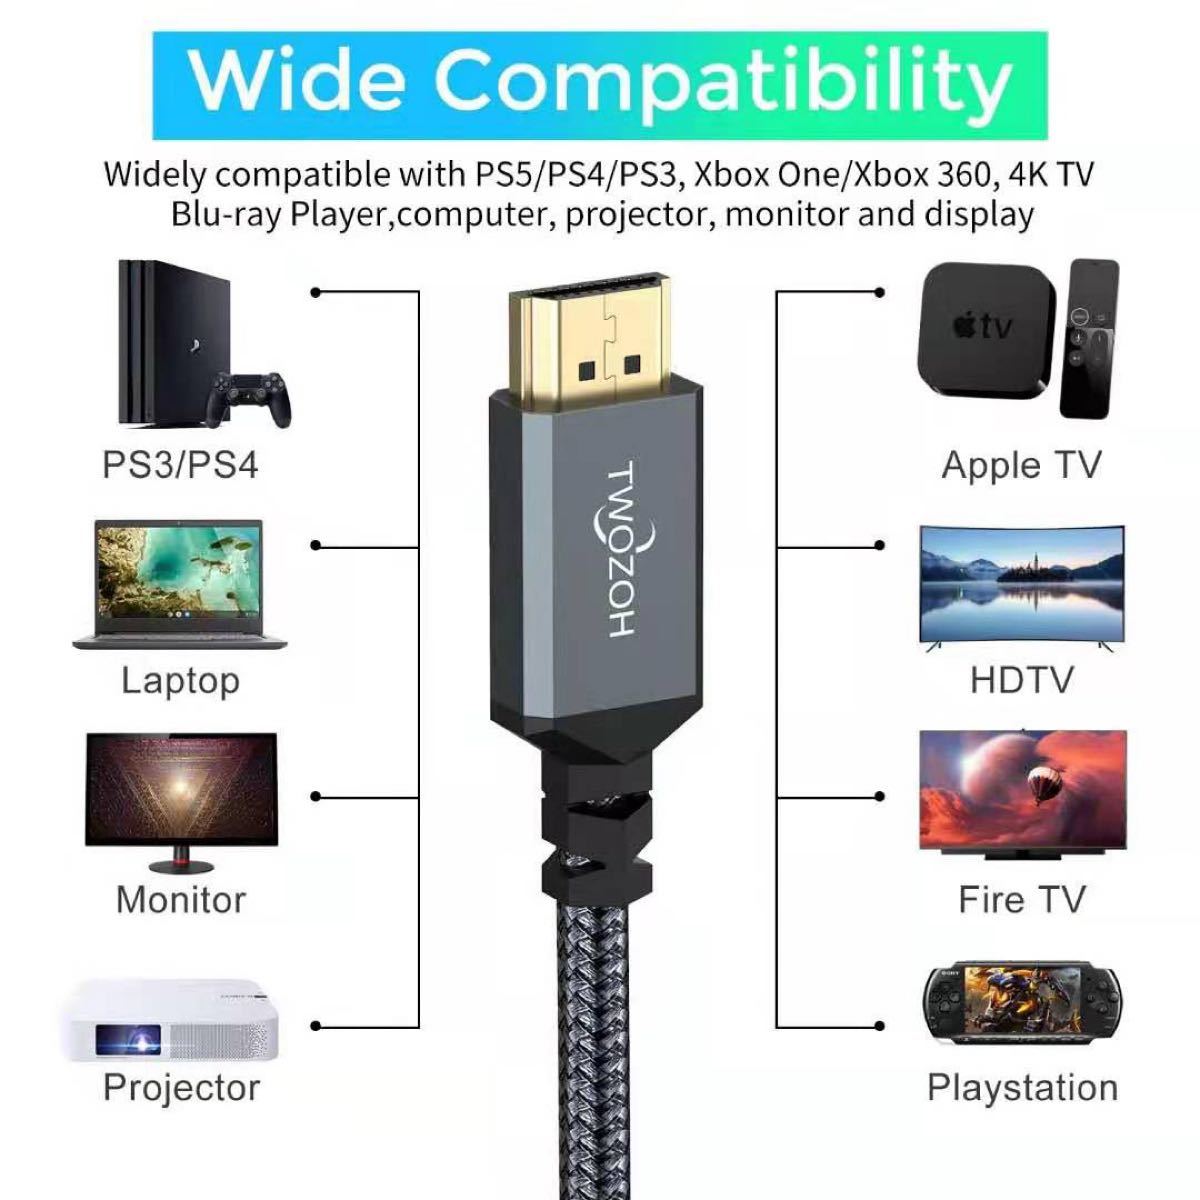 HDMIケーブル 5M, HDMI 2.0 4K/60Hz ハイスピード  4K解像度 HDMI HDMI変換ケーブル 4K解像度